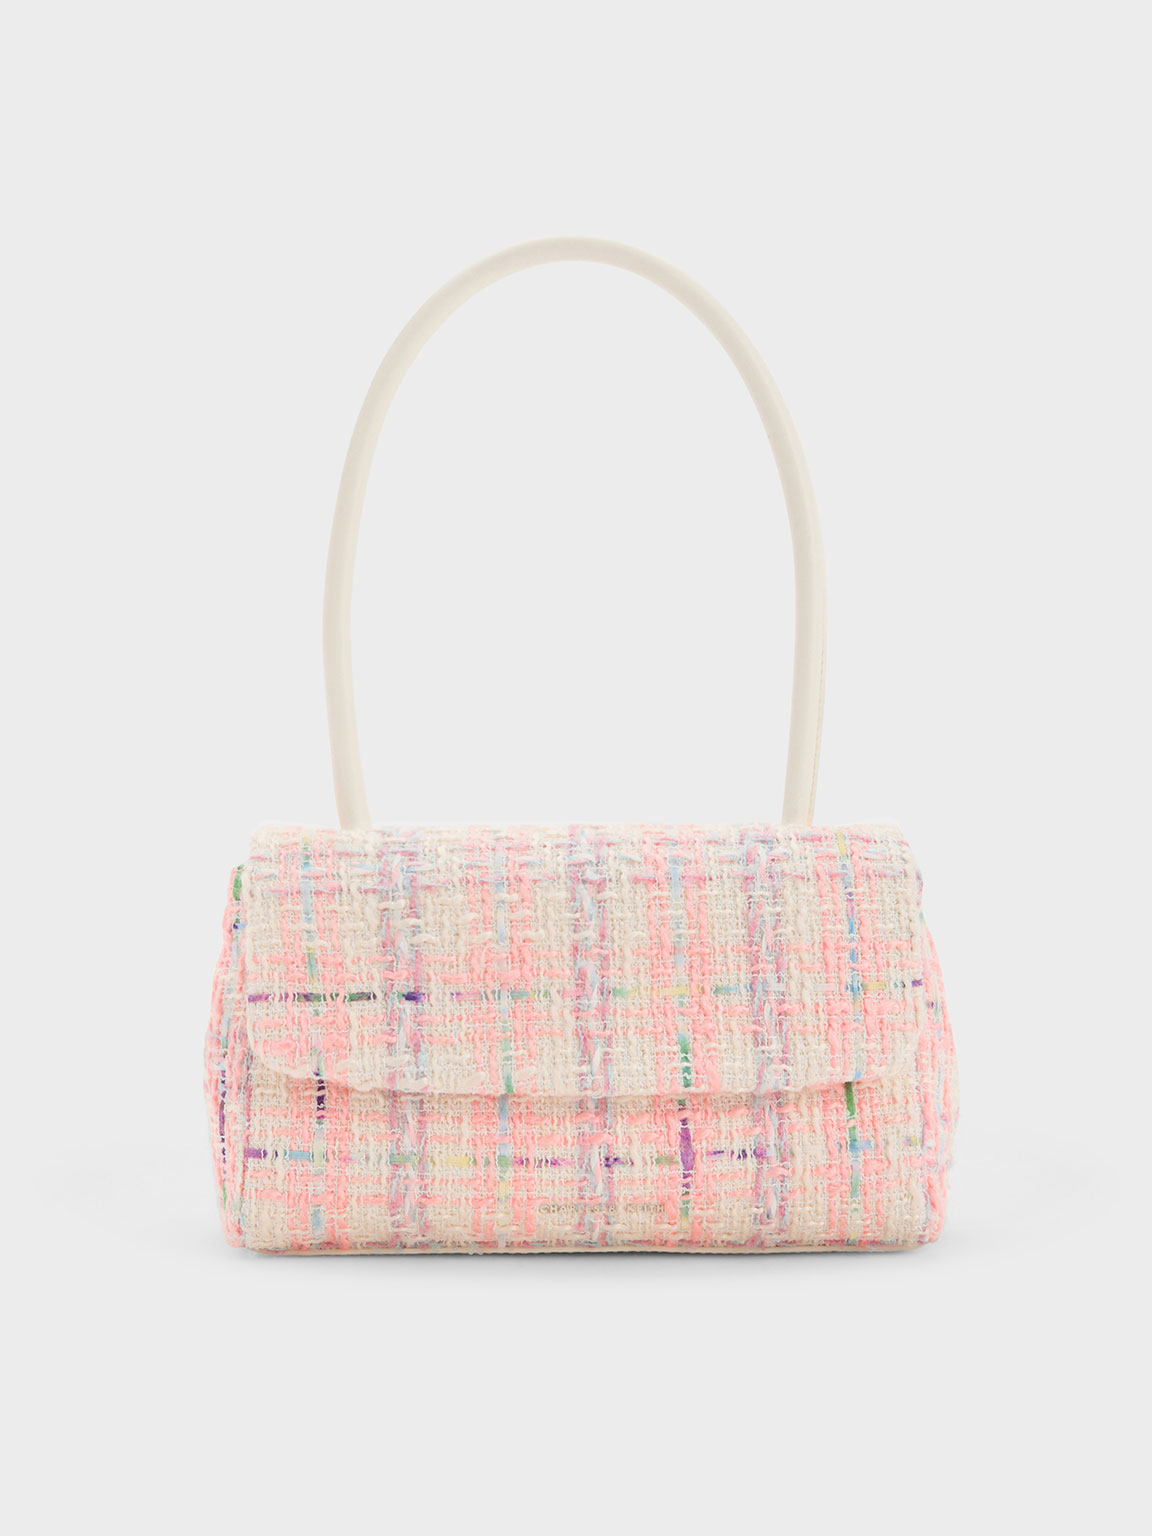 Irish Pink Plaid Tweed Handbag, Tweed Purse